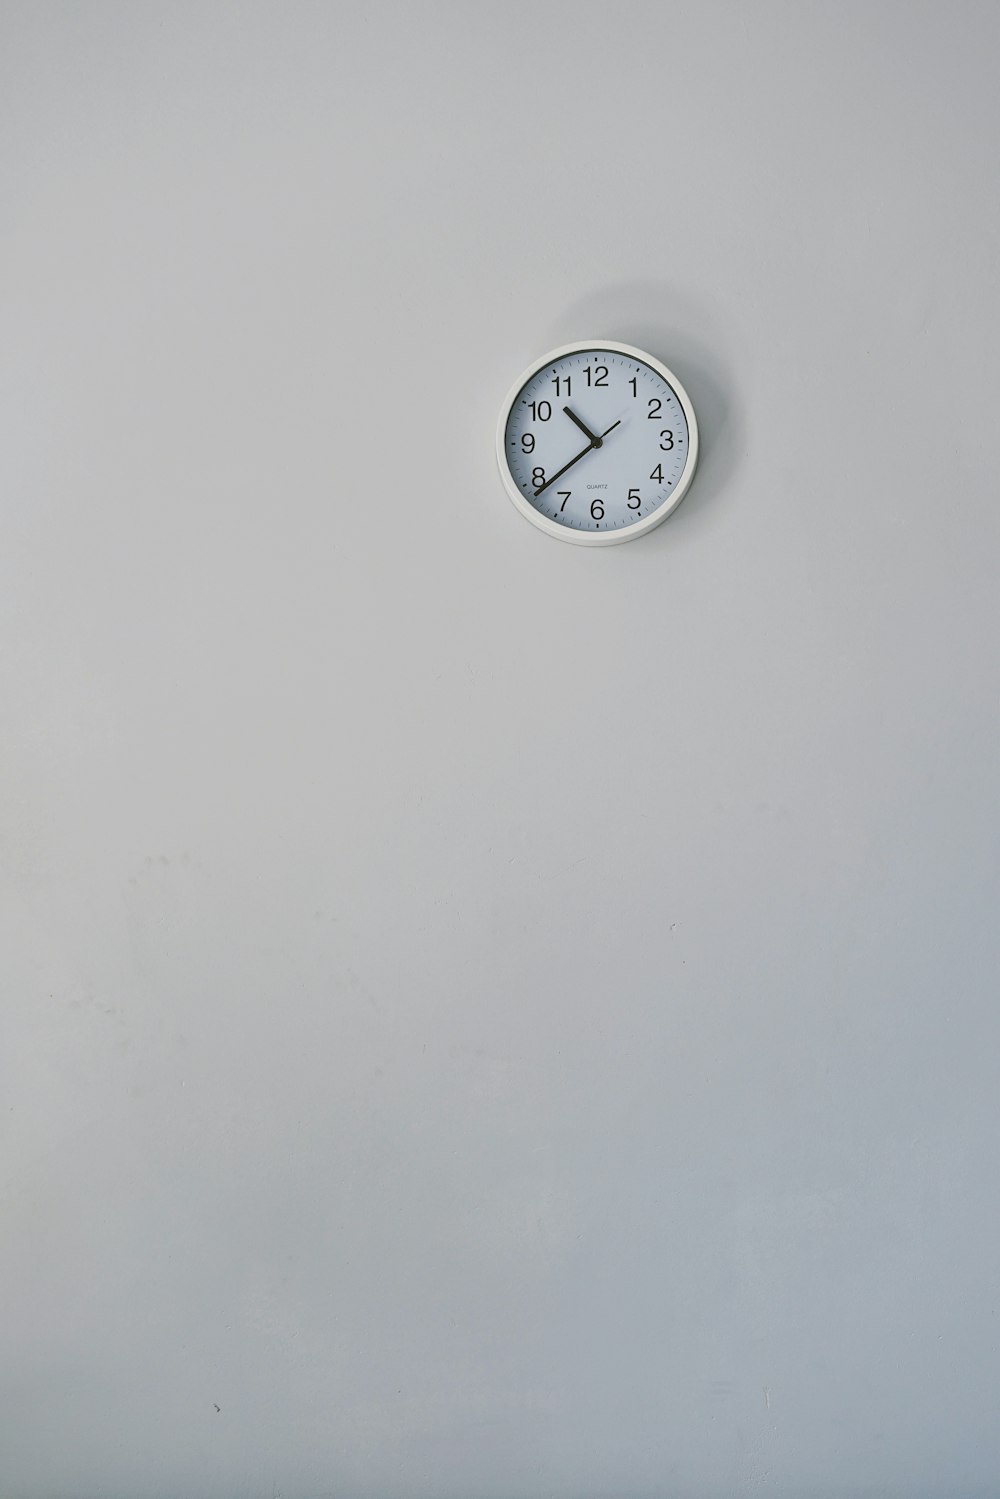 Horloge murale analogique ronde blanche affichant 10 :38